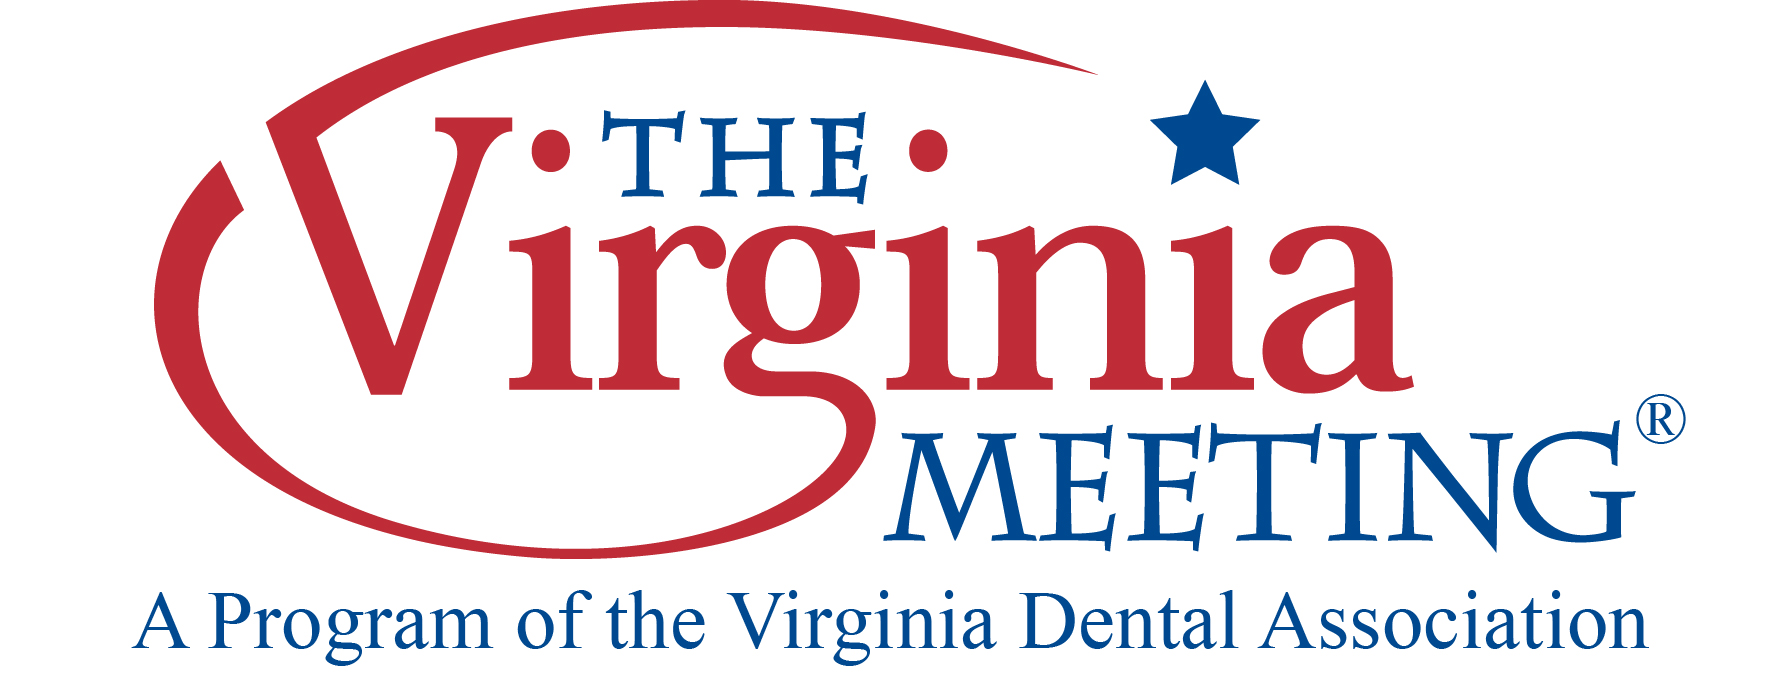 Virginia Meeting Logo RGB